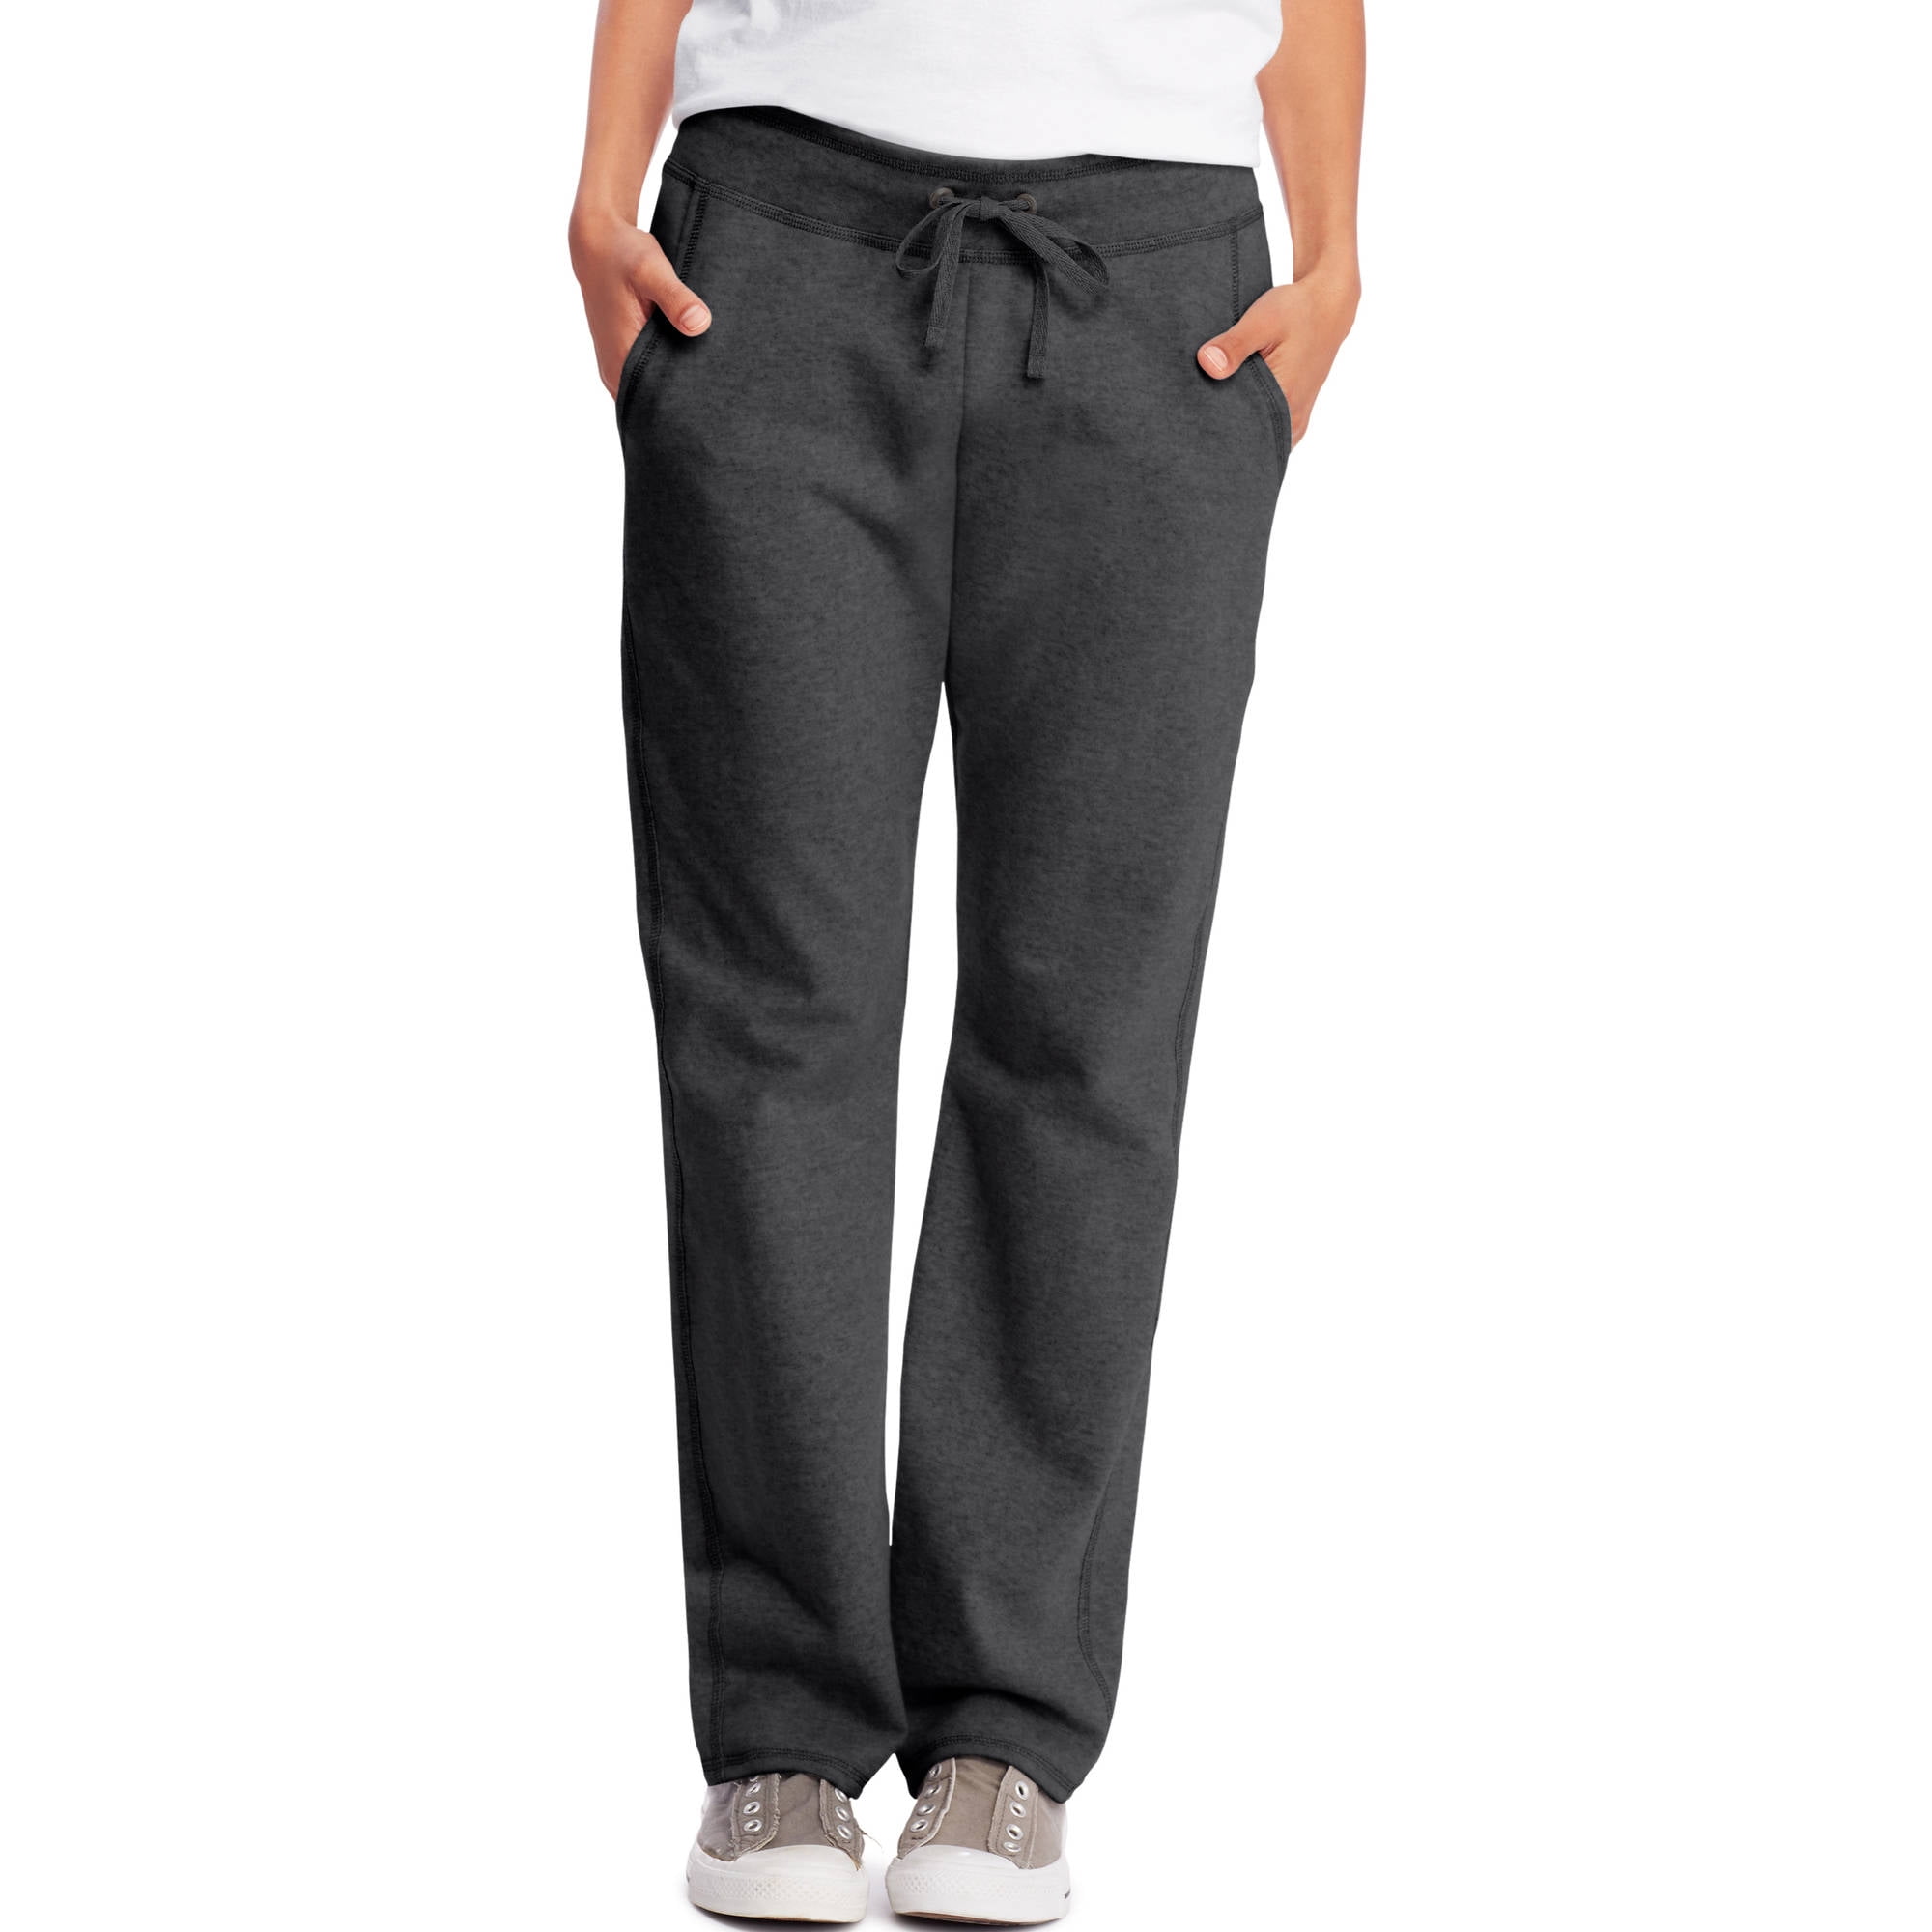 GetUSCart- Hanes Women's Petite-Length Middle Rise Sweatpants - Large -  Hanes Navy Heather